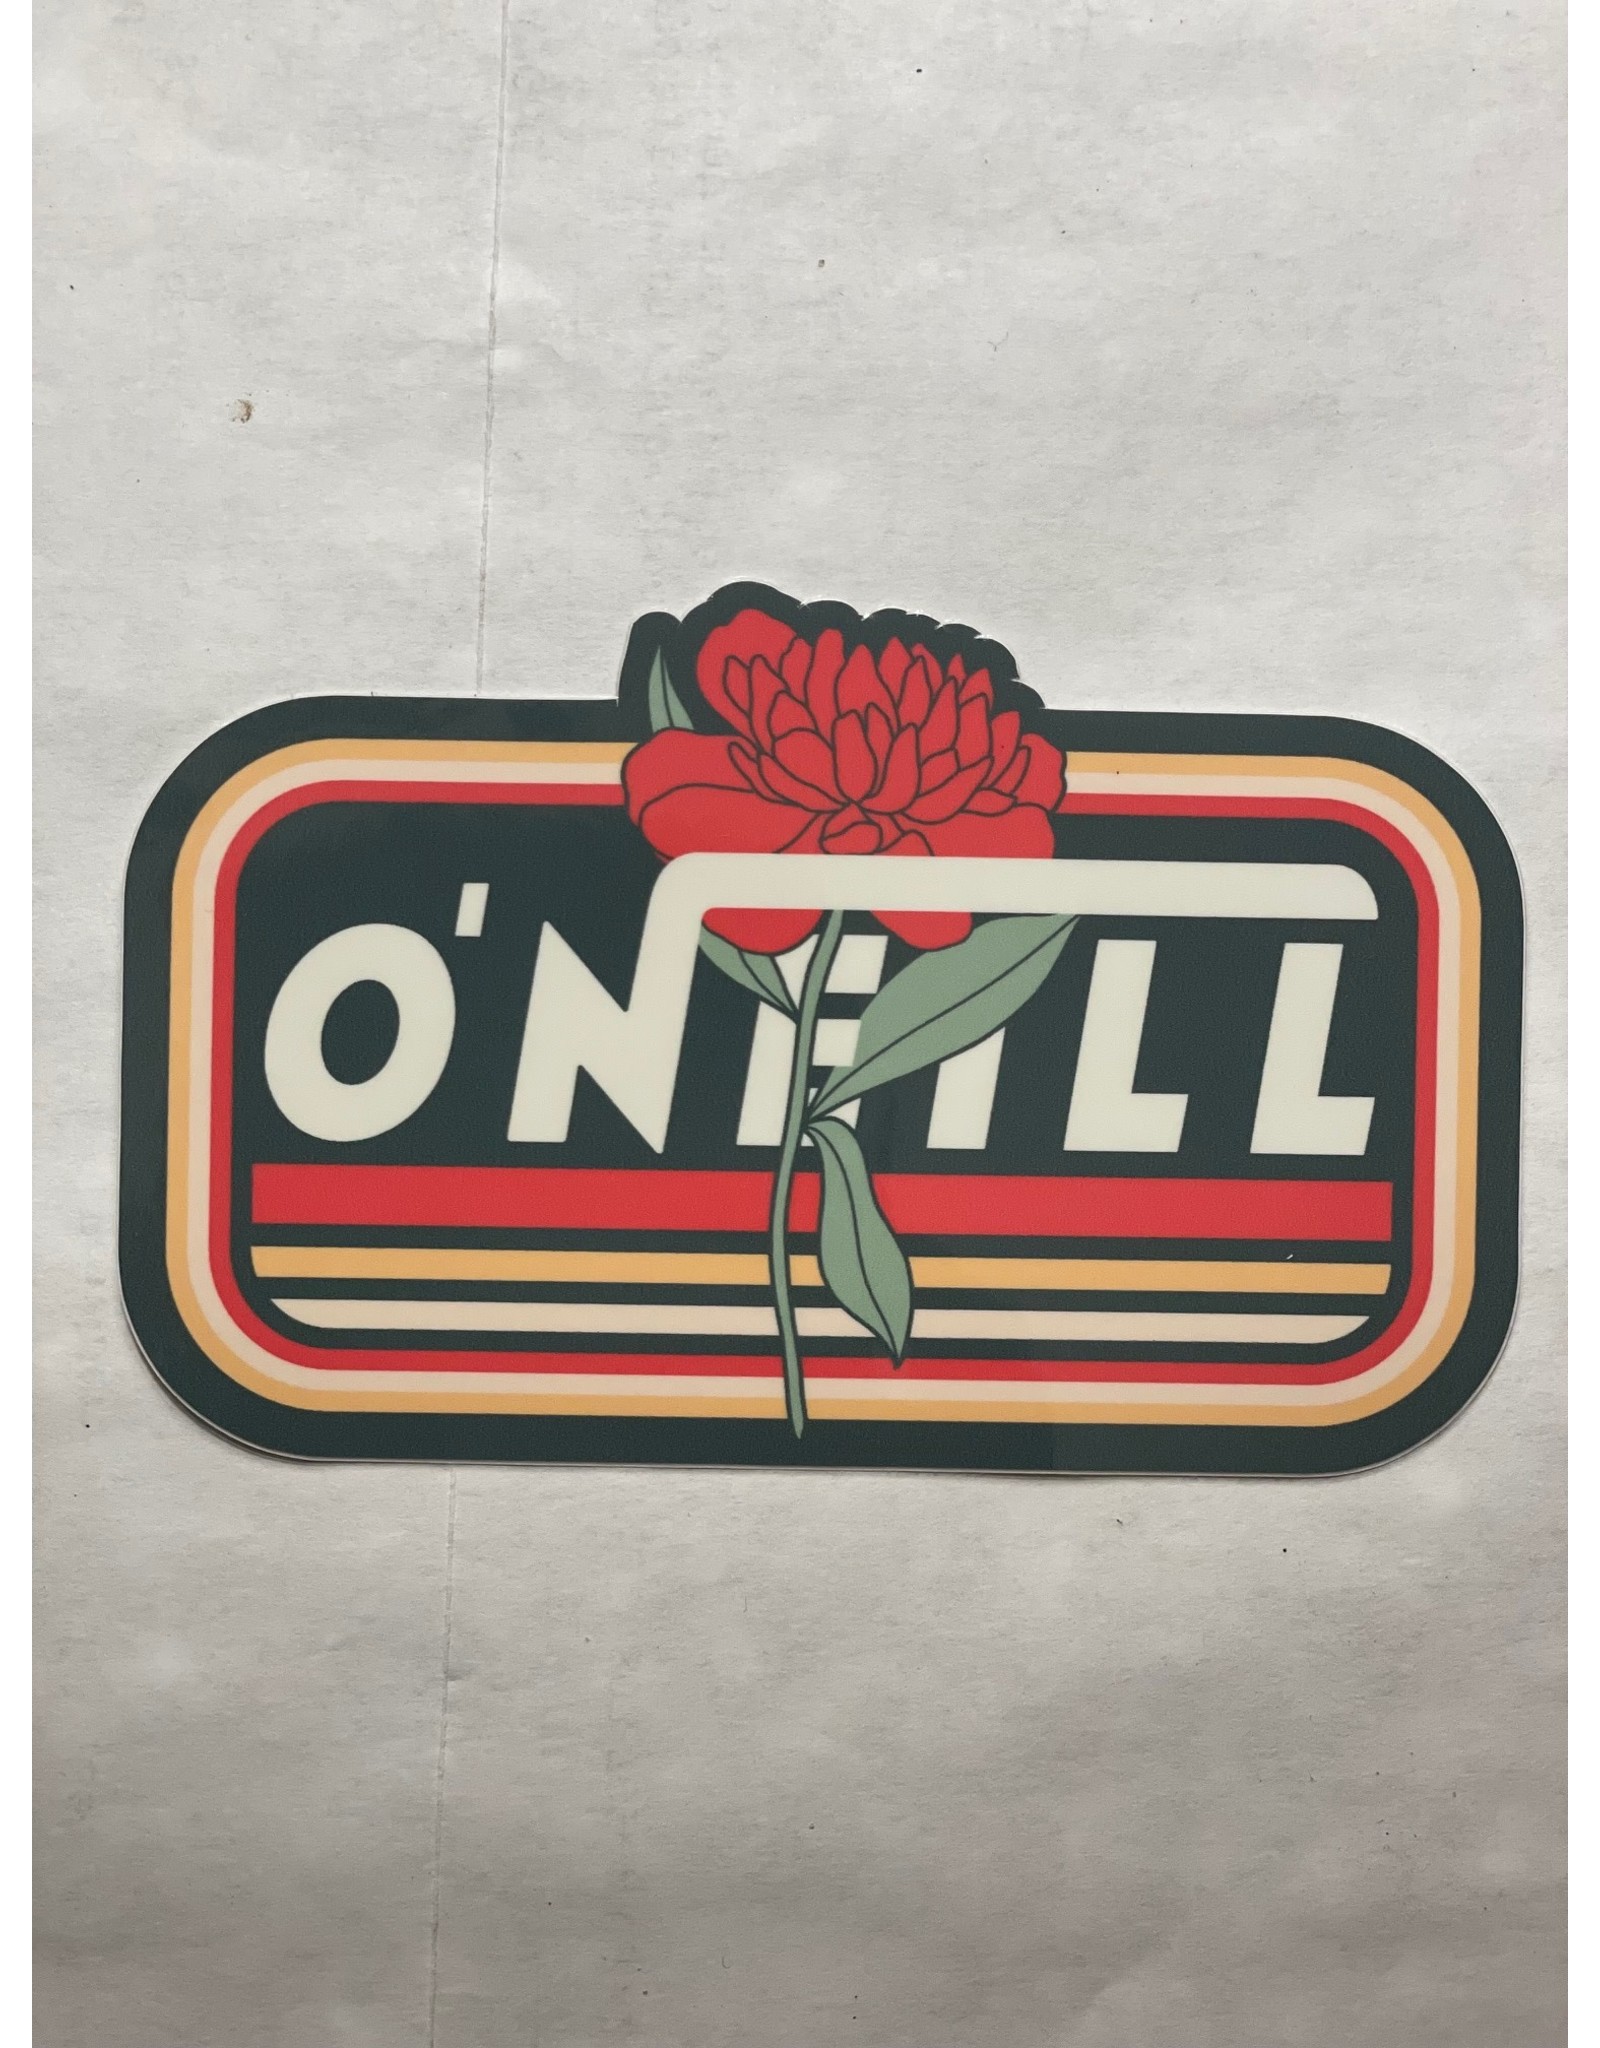 ONEILL JRS O'NEILL SUNLIFE STICKERS